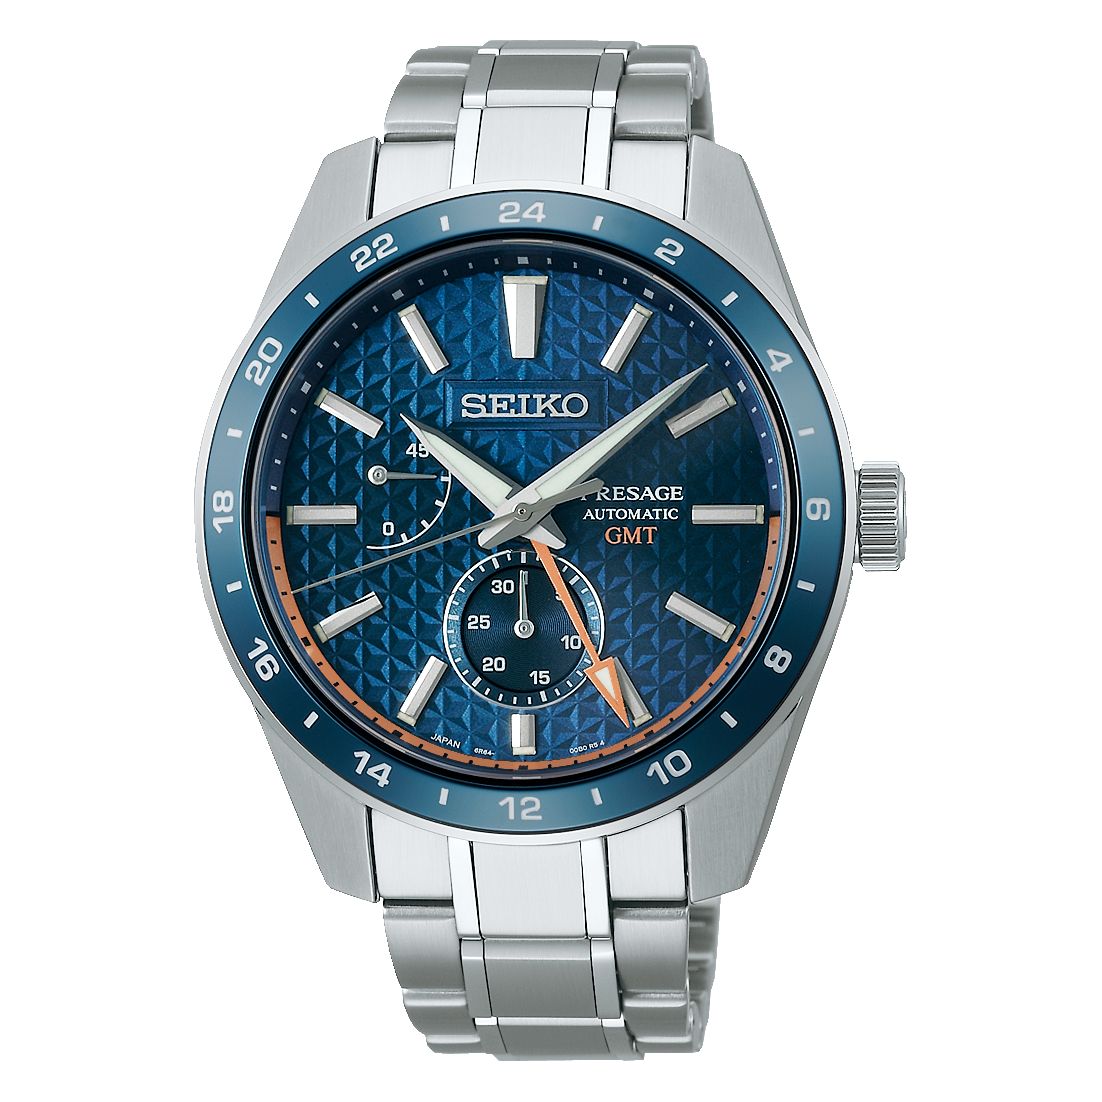 Seiko Presage Sharp Edge GMT Blue Automatic Watch - SPB217J1